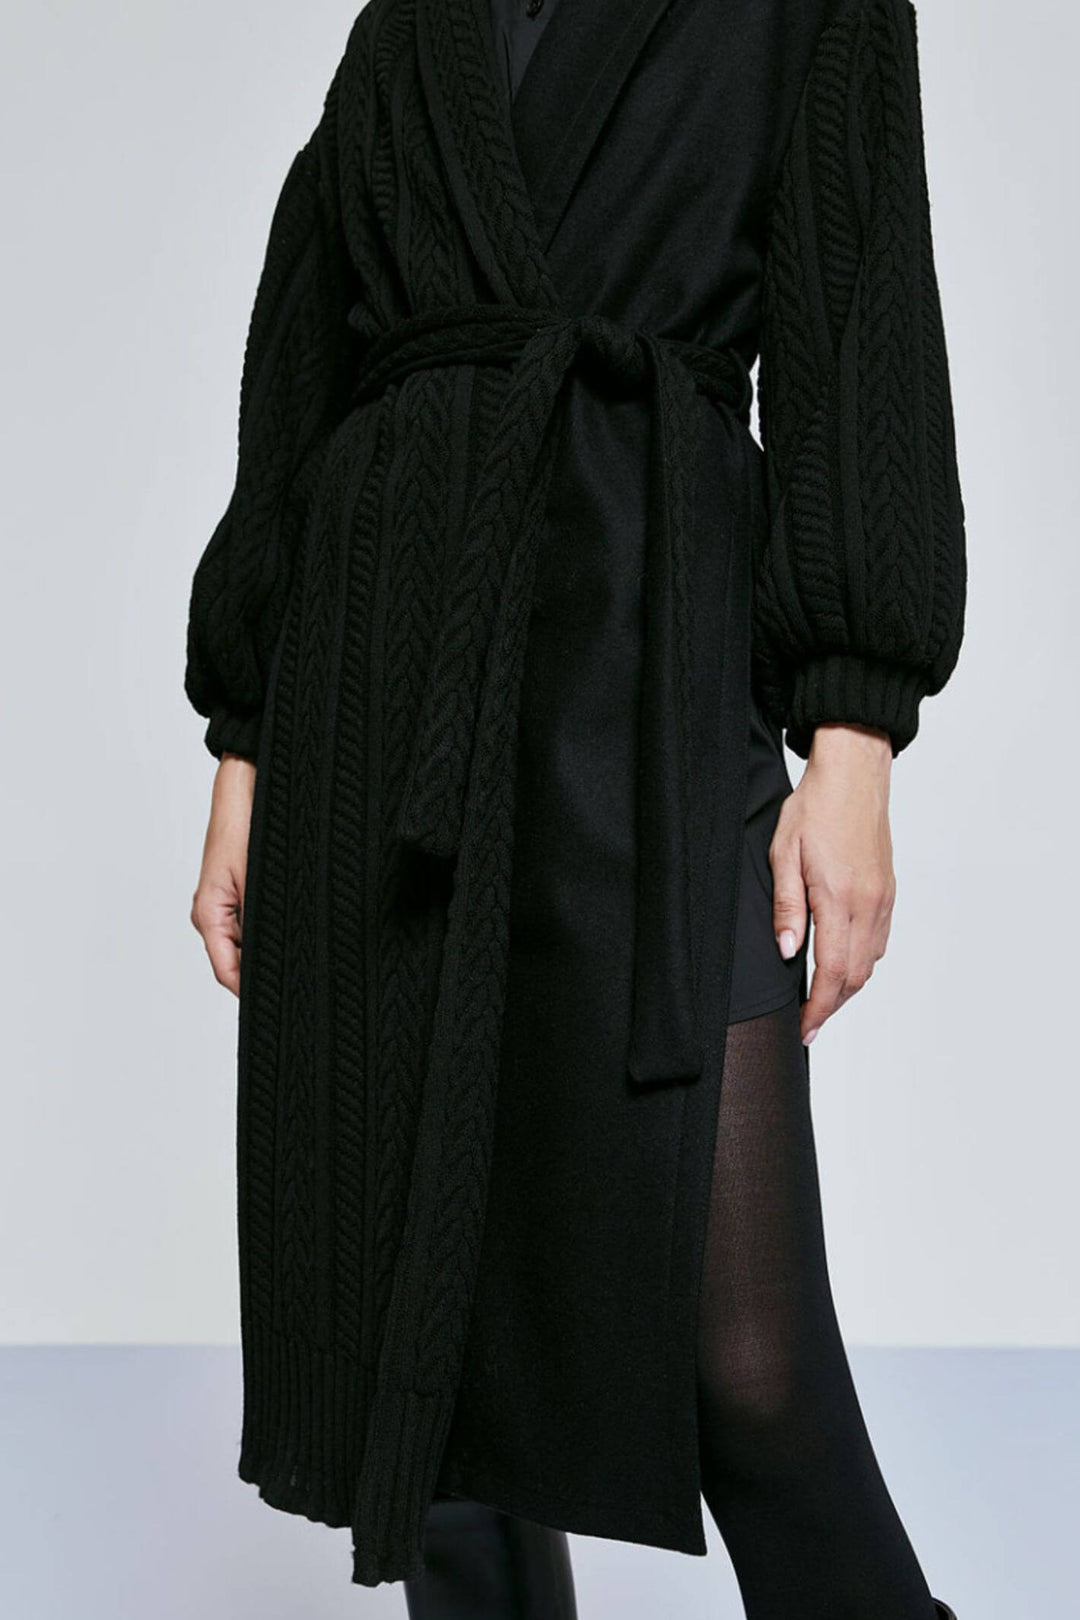 Access Fashion 9033 Black Crochet Detail Coat